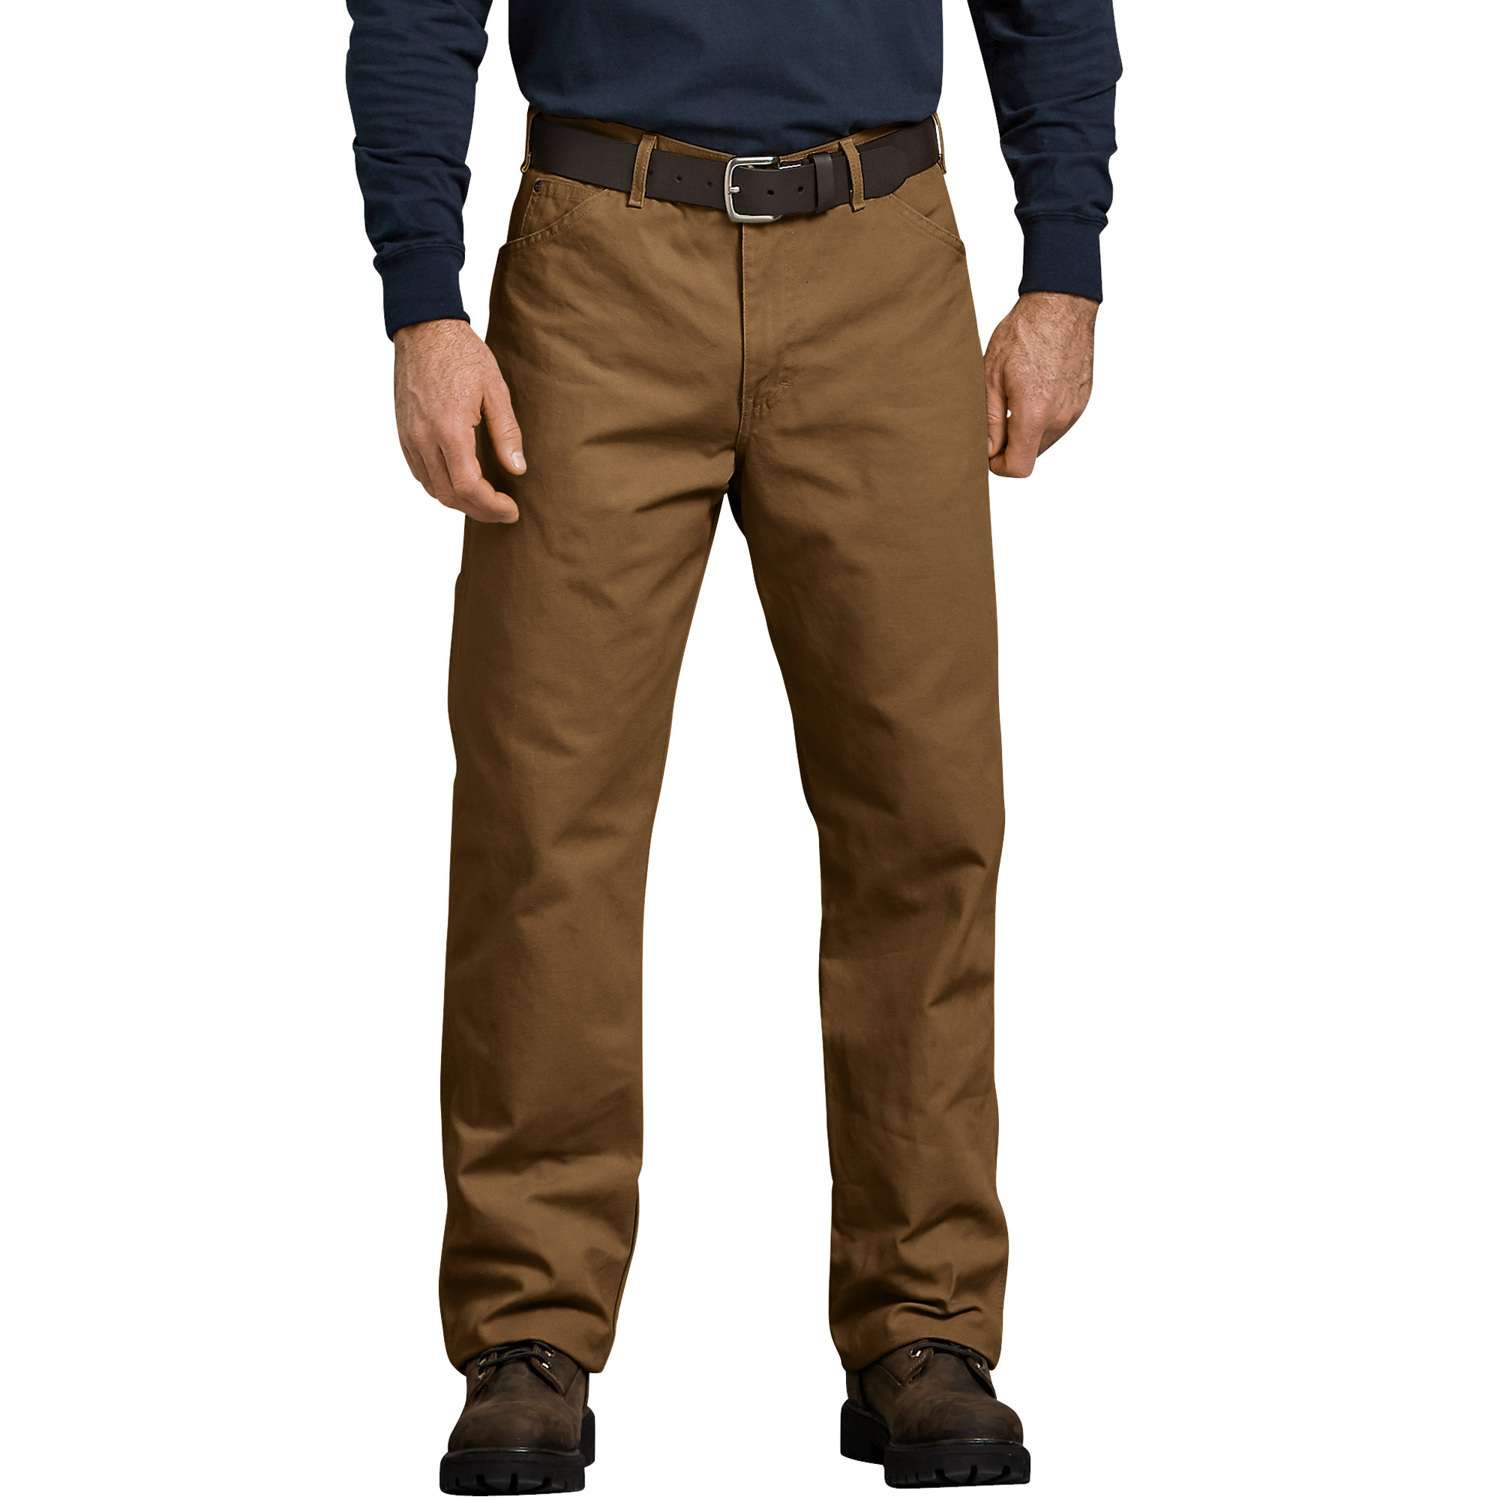 Dickies Men's Cotton Carpenter Jeans Brown x 7 pocket 1 pk